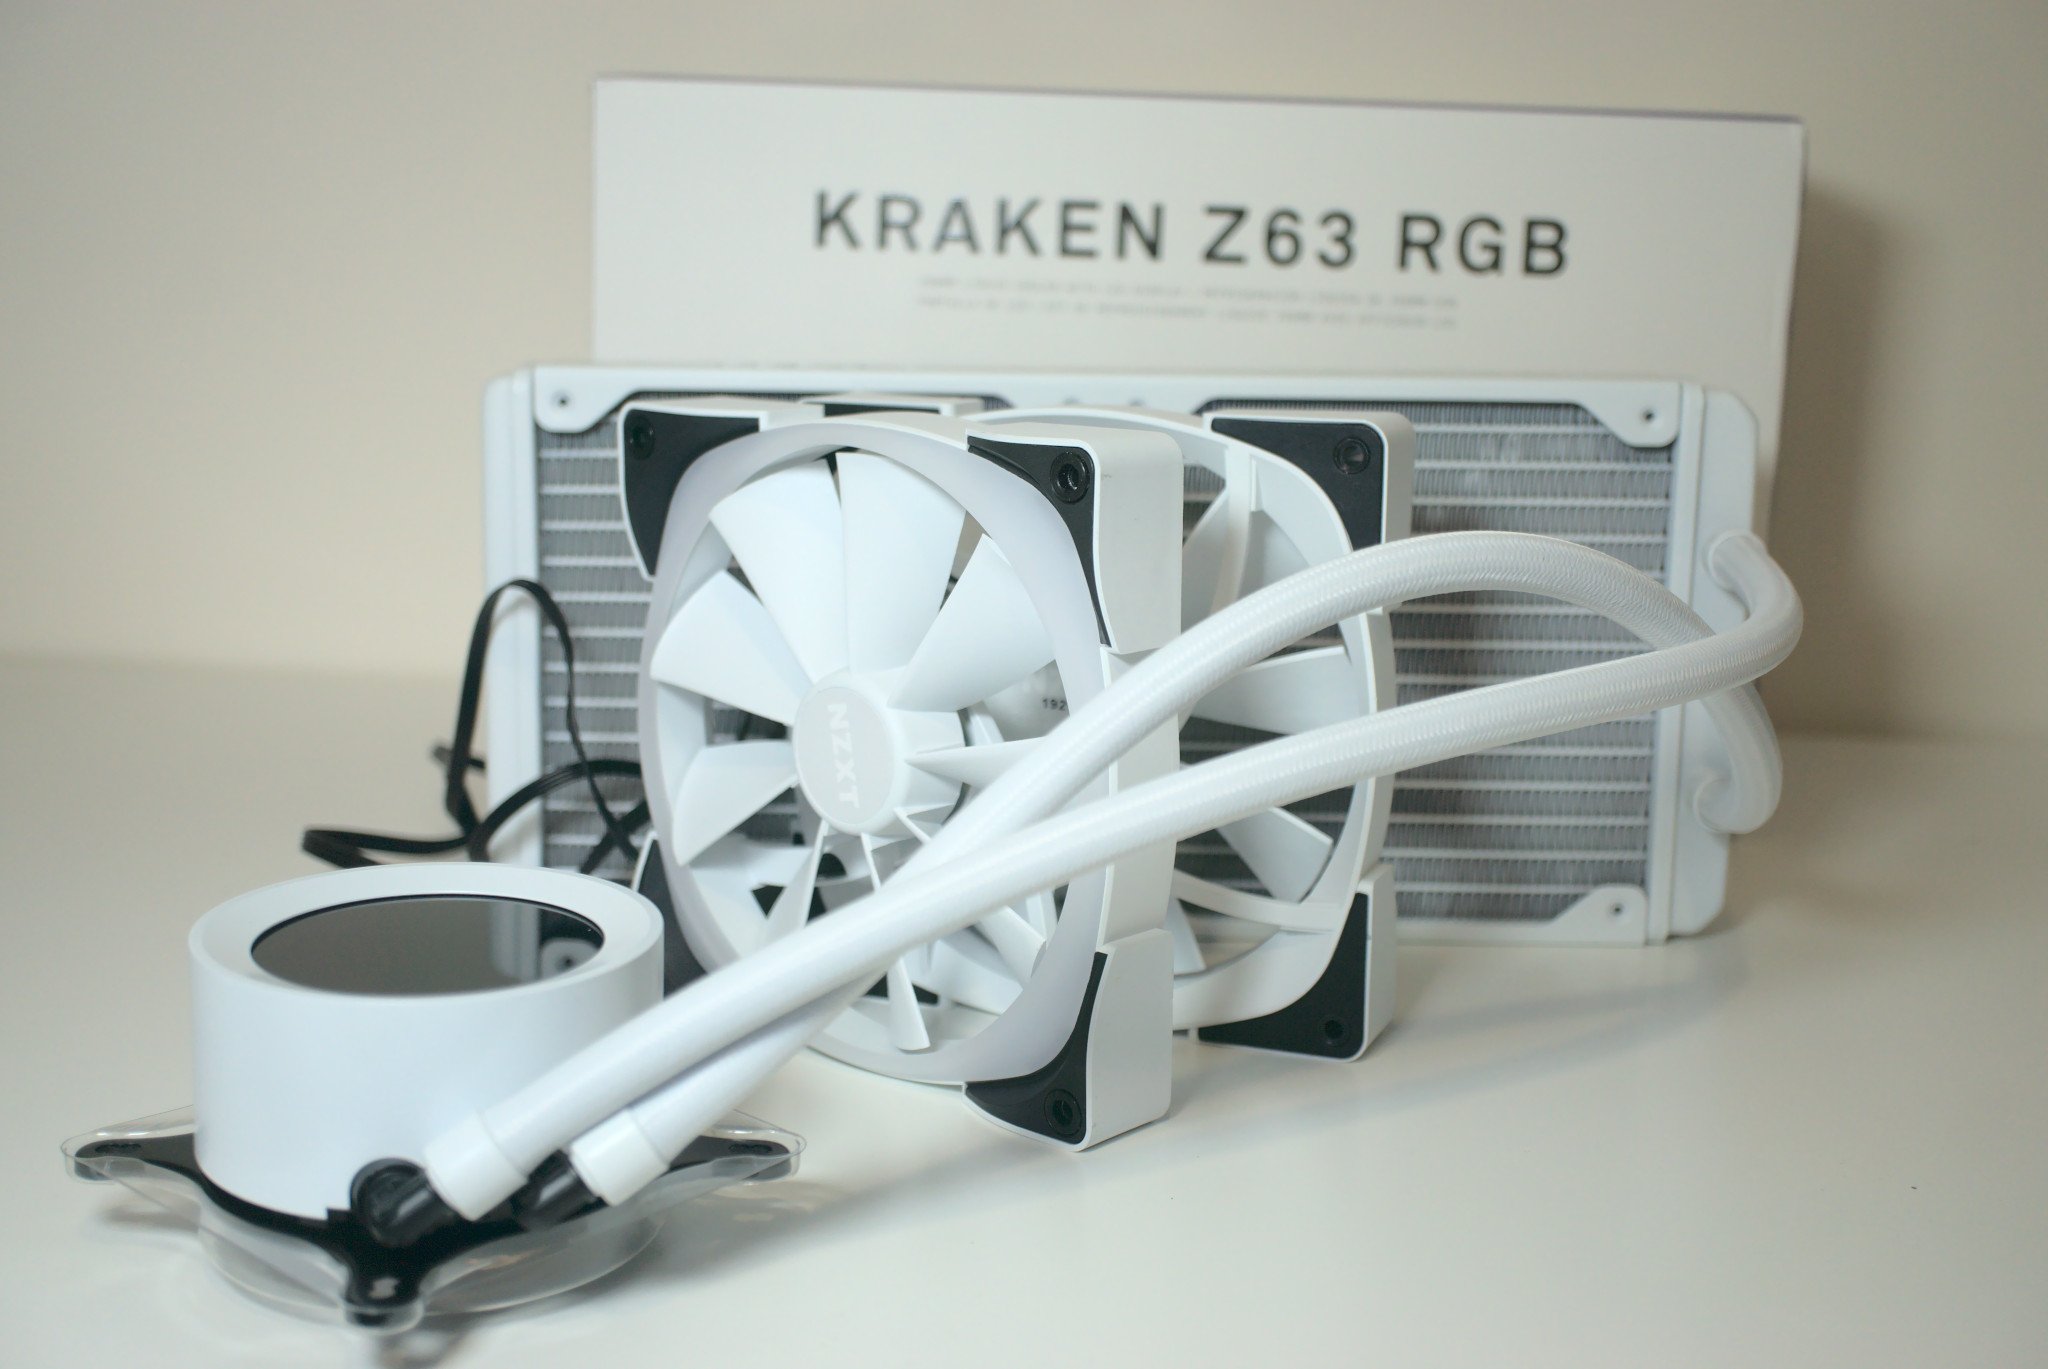 NZXT's entire Kraken AIO liquid CPU cooler range now available in